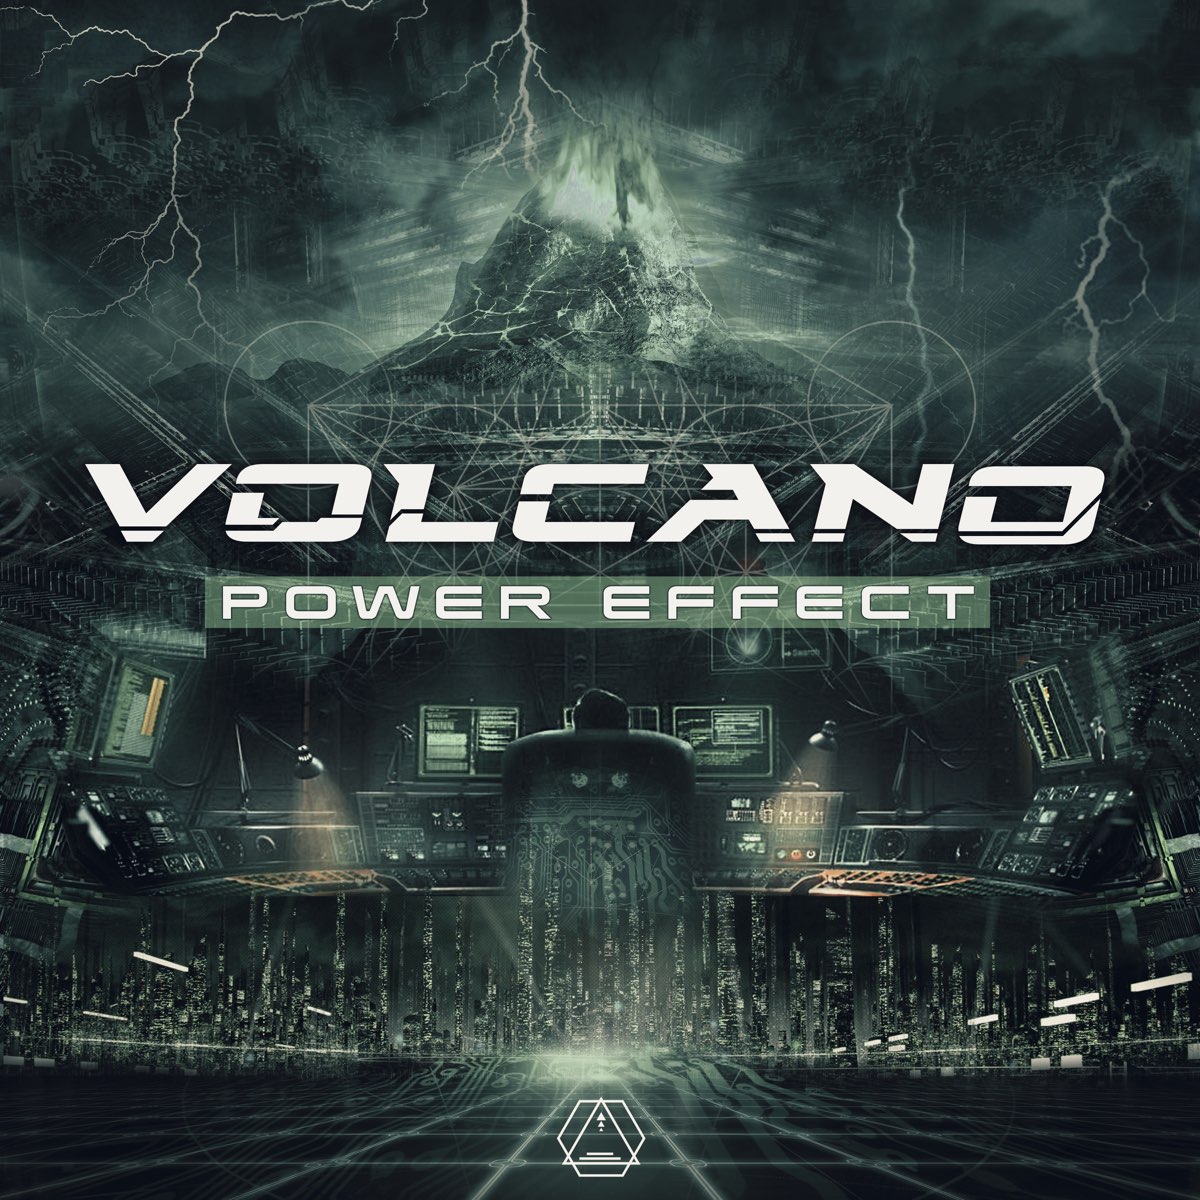 Power released. Power Effect. Volcan Power.